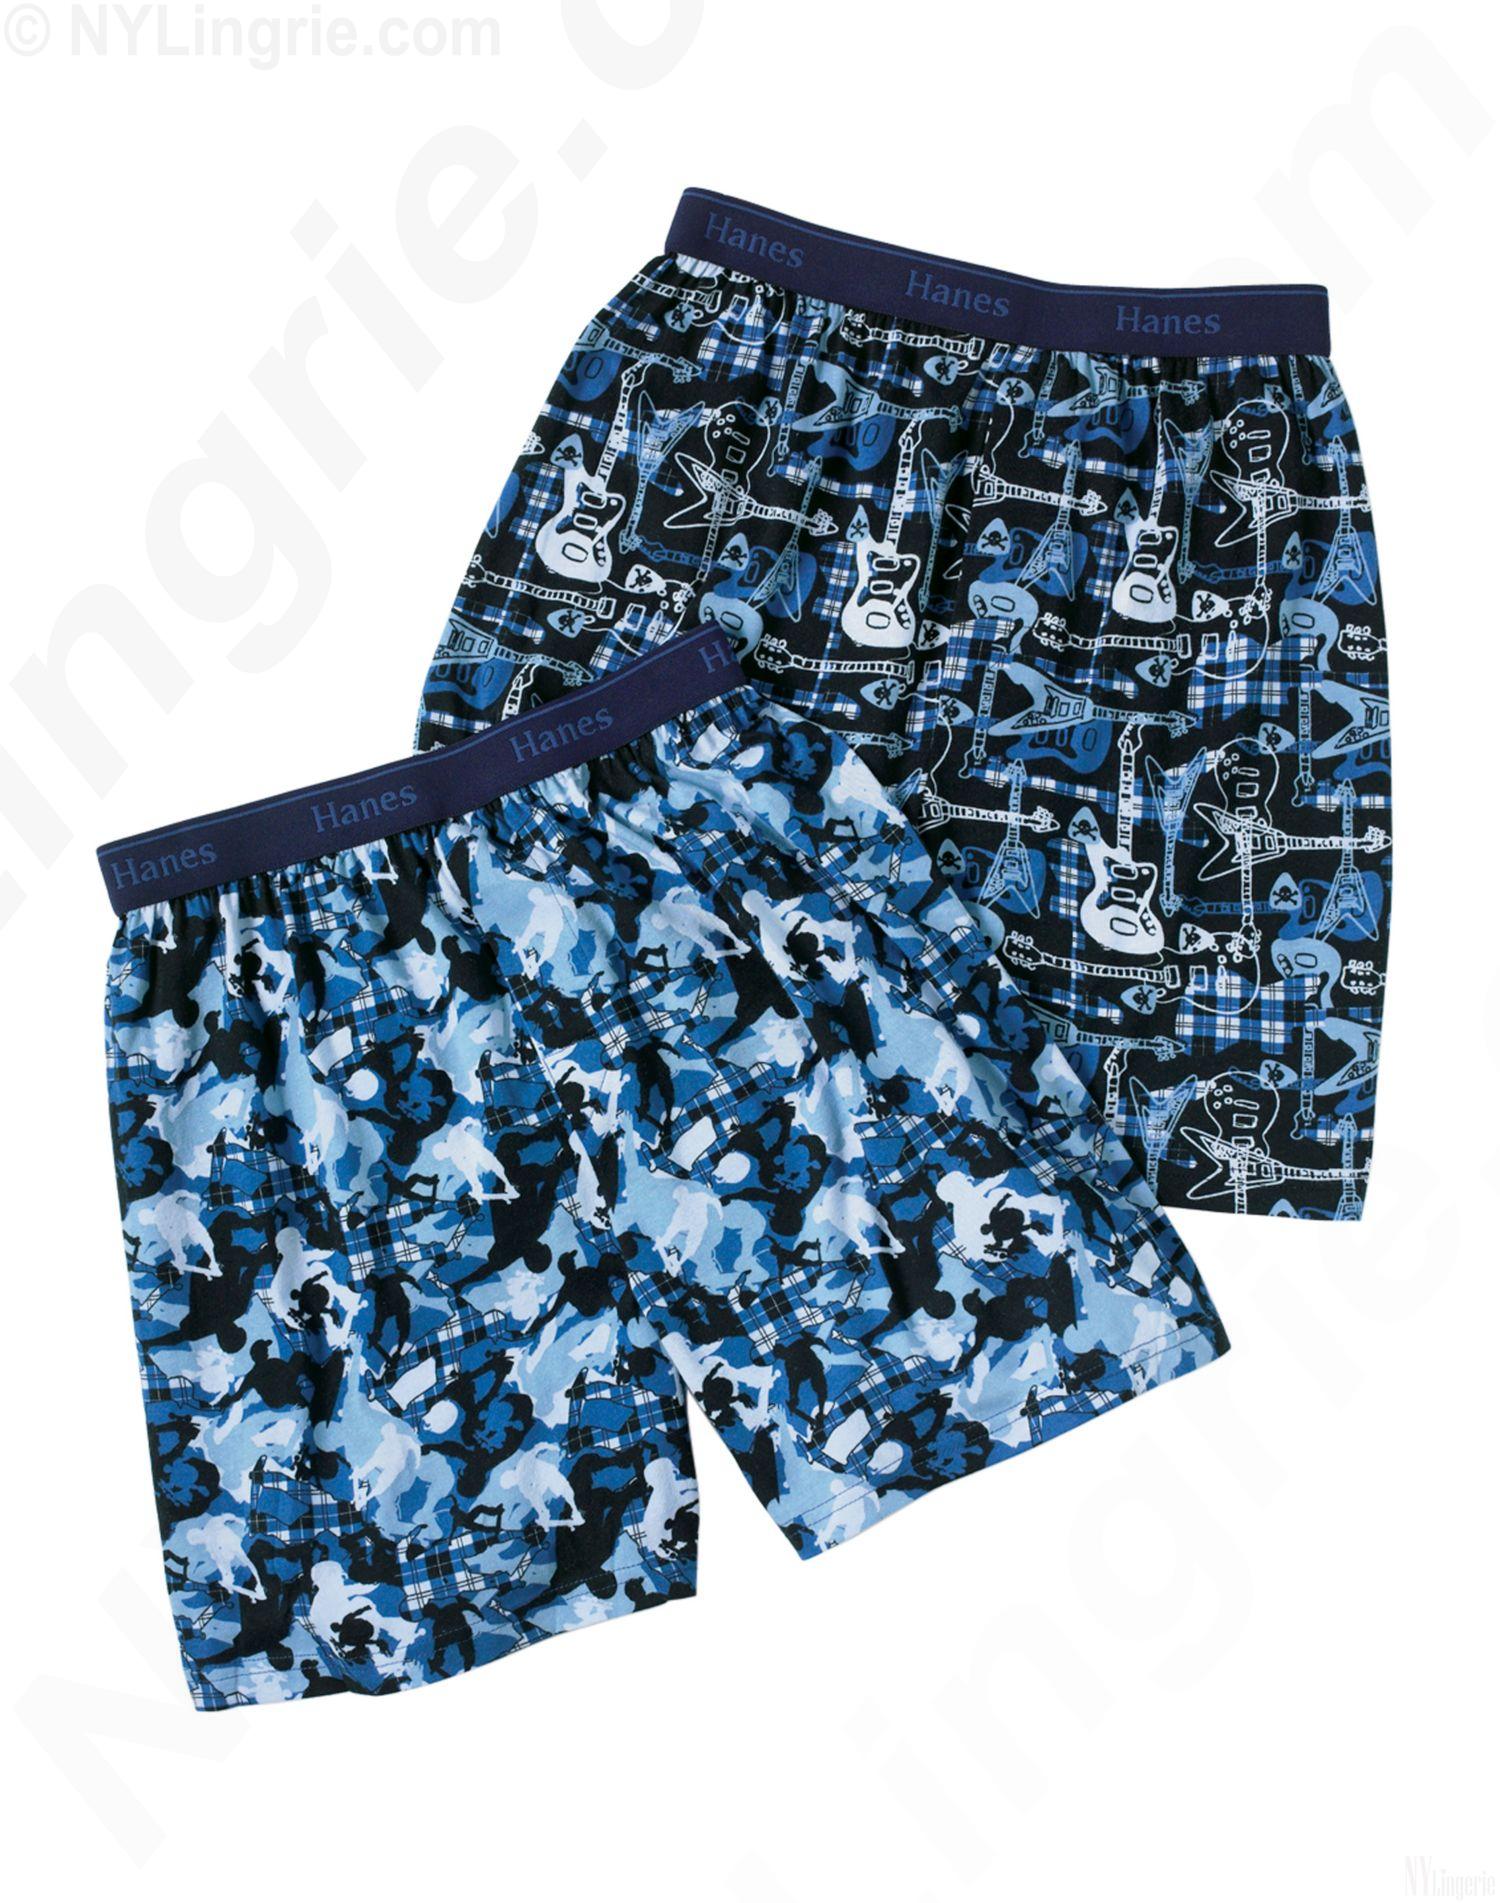 B714XP - Hanes Classics Boys Printed Camo Knit Boxer 2 Pack